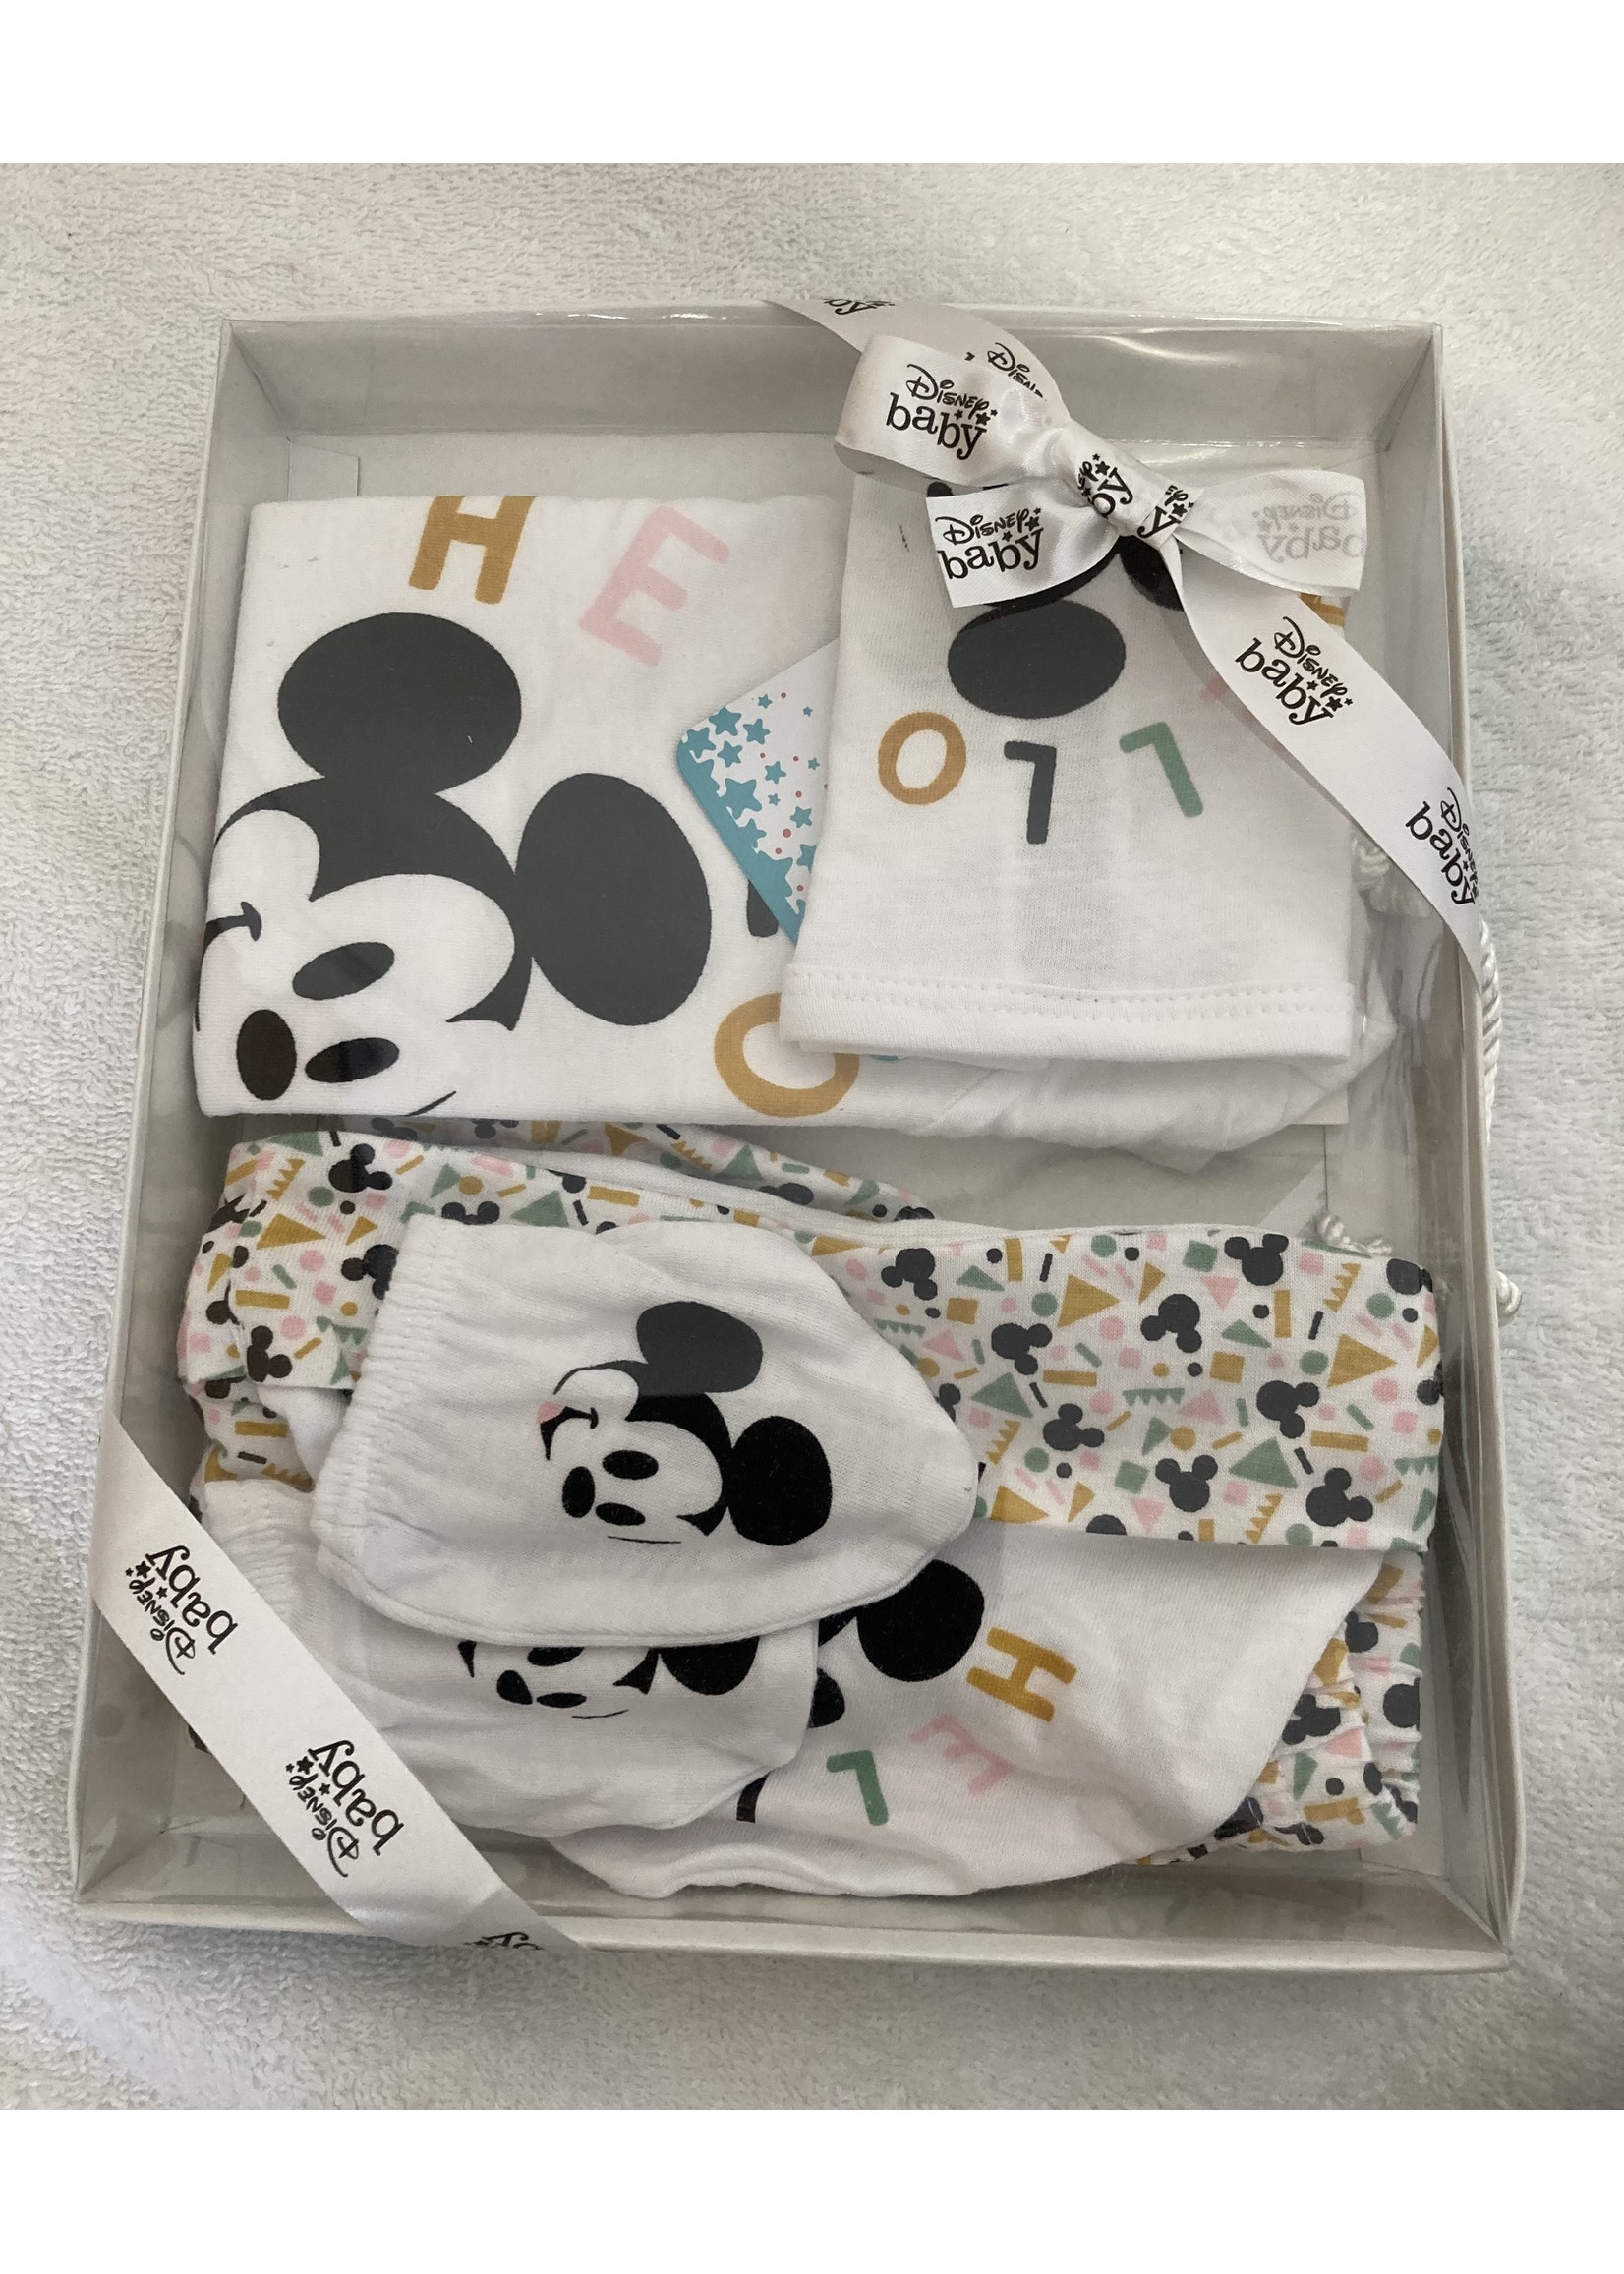 Disney baby Mickey Mouse birth set from Disney white